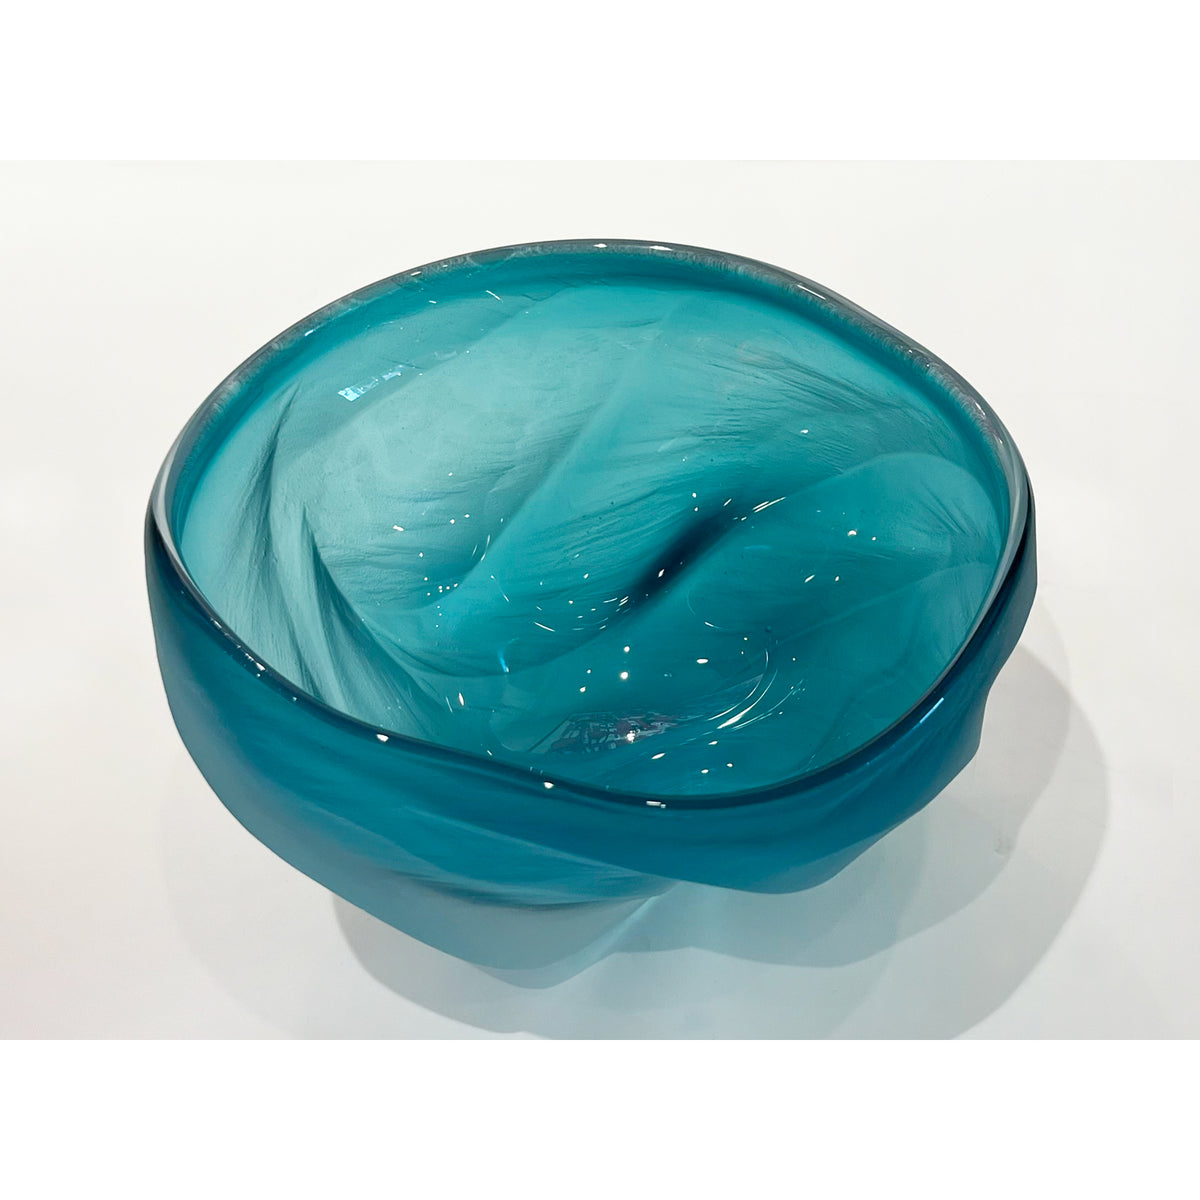 Brad Copping - Turquoise Undula Bowl, 4" x 7" x 6"